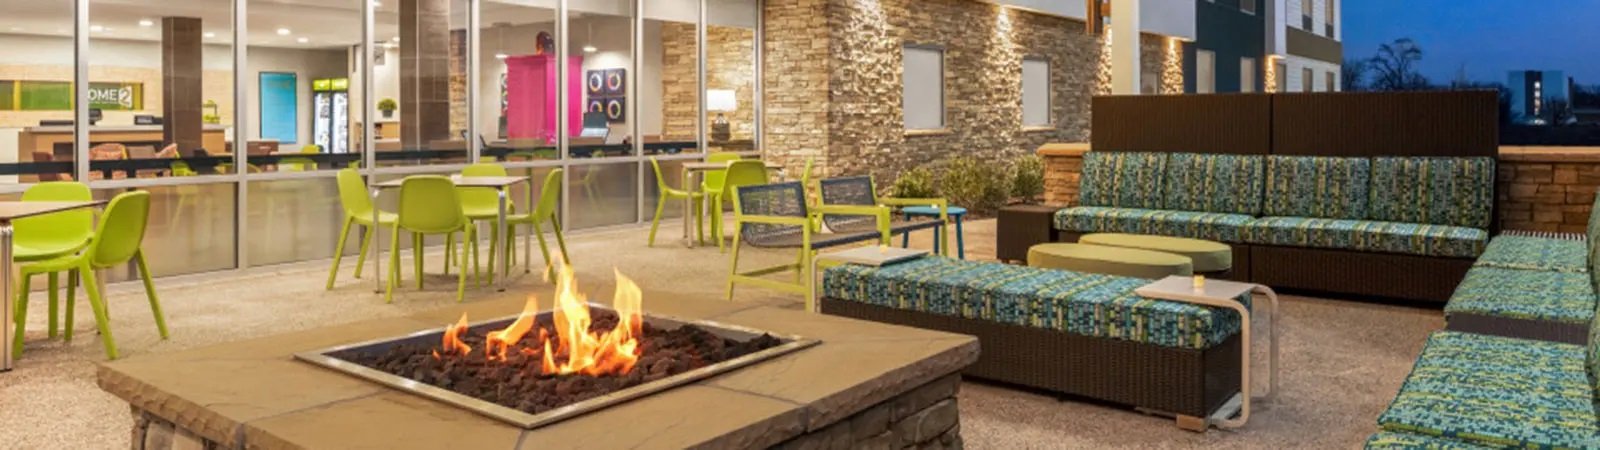 Bristolconventioncenter Outdoor Lounge Firepit 1433394